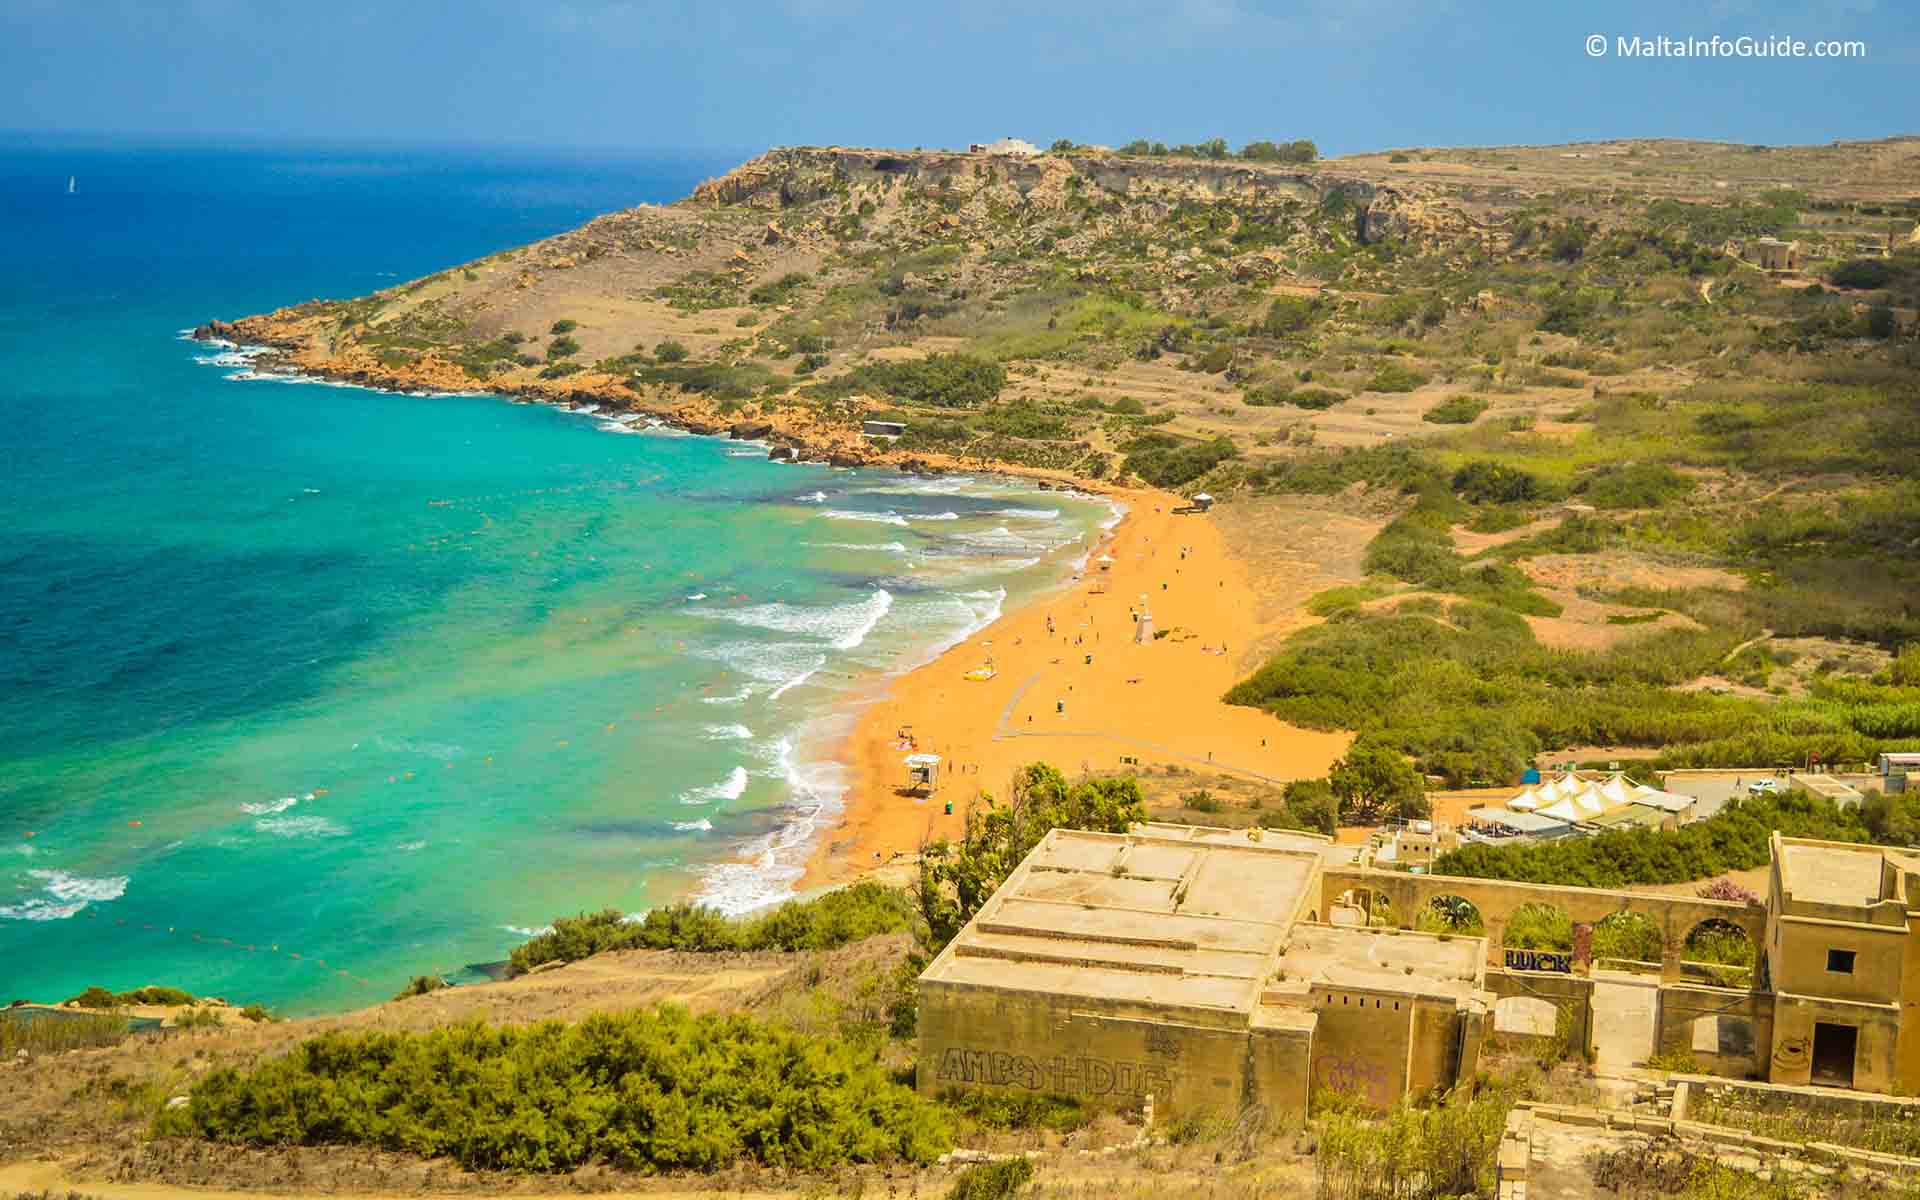 The view of Ramla L-Hamra Bay